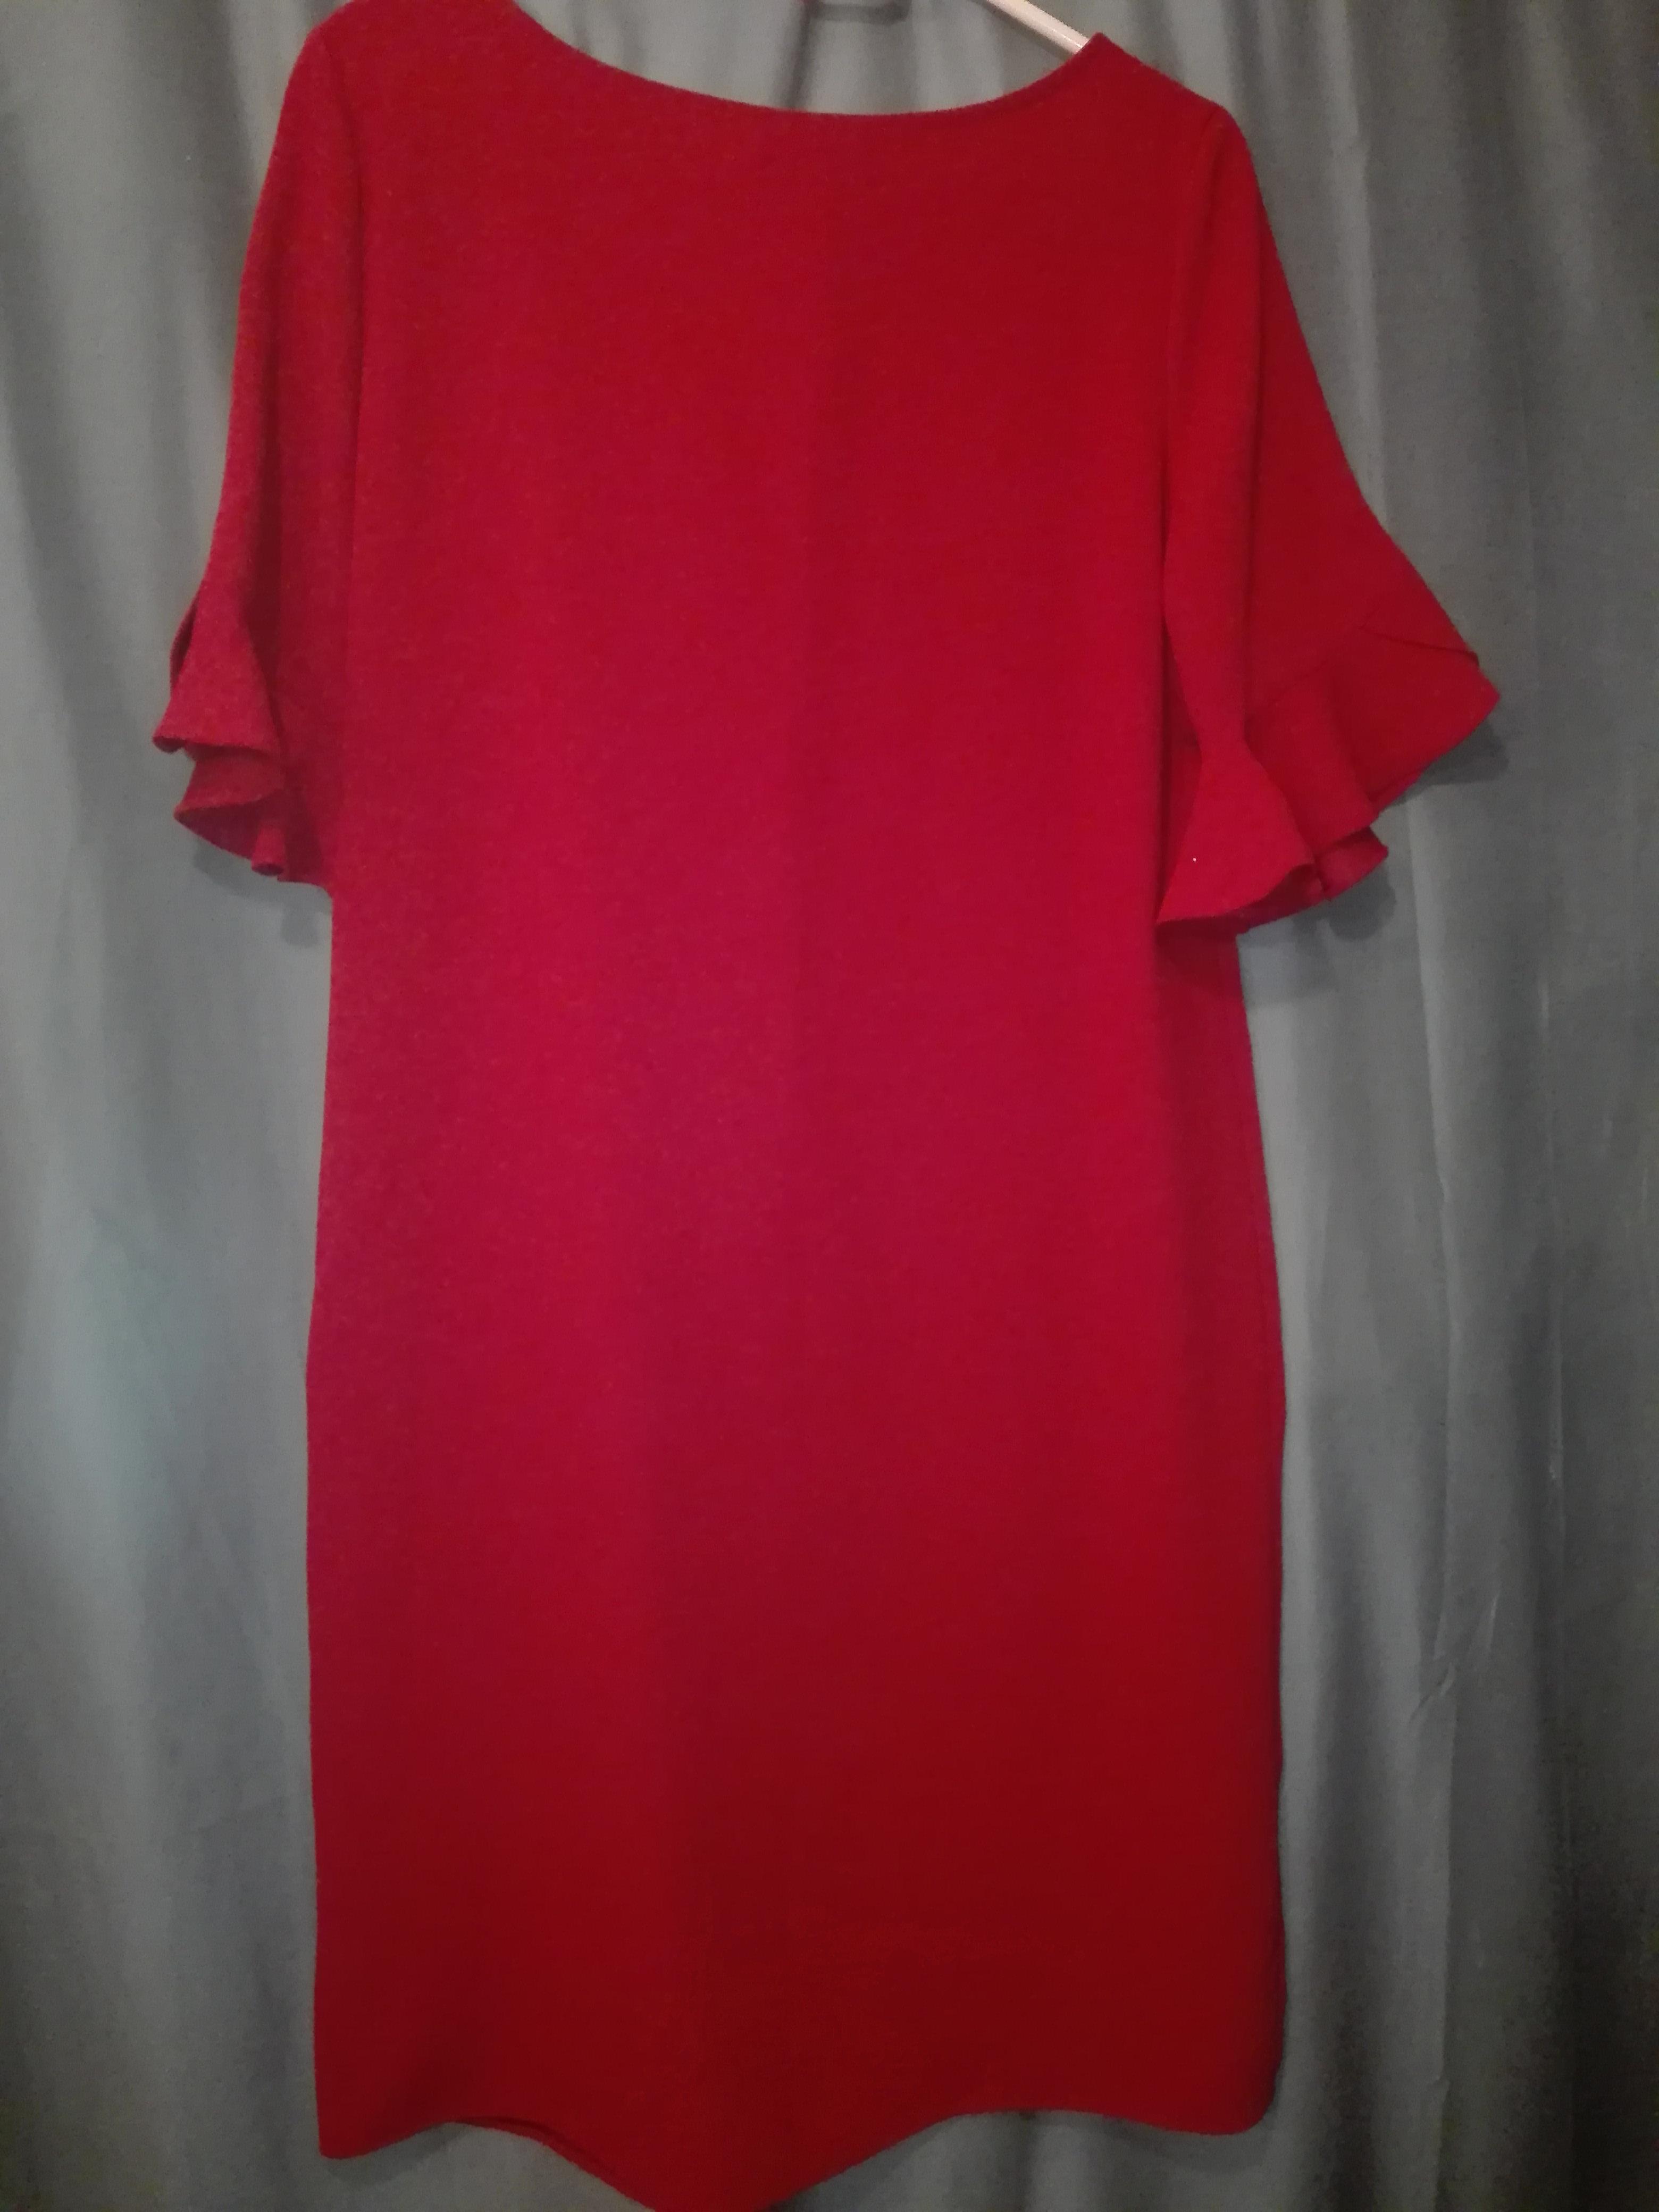 troc de troc robe rouge t38 image 0